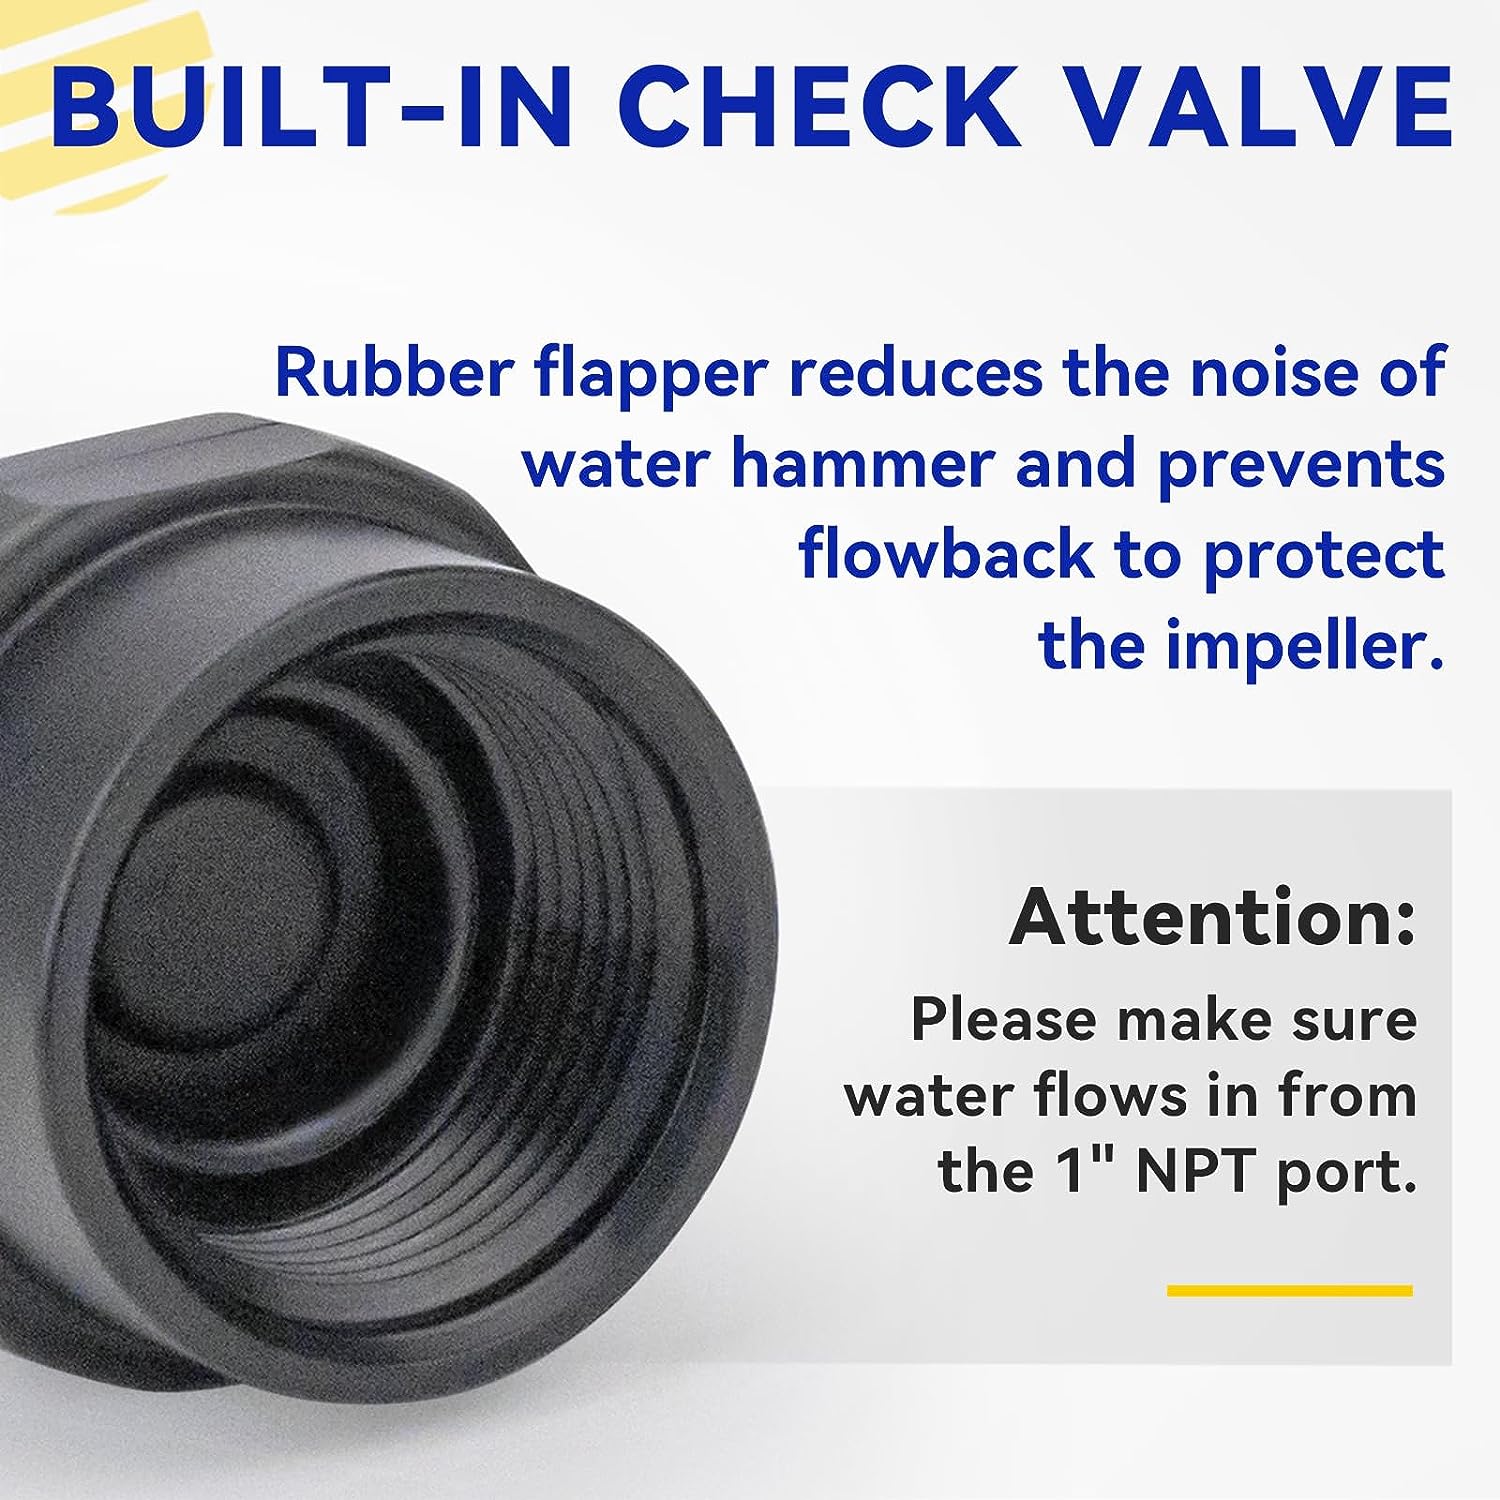 Acquaer 3/4'' NPT x 1'' NPT Adapter for sump pump, built-in check valve - Acquaer